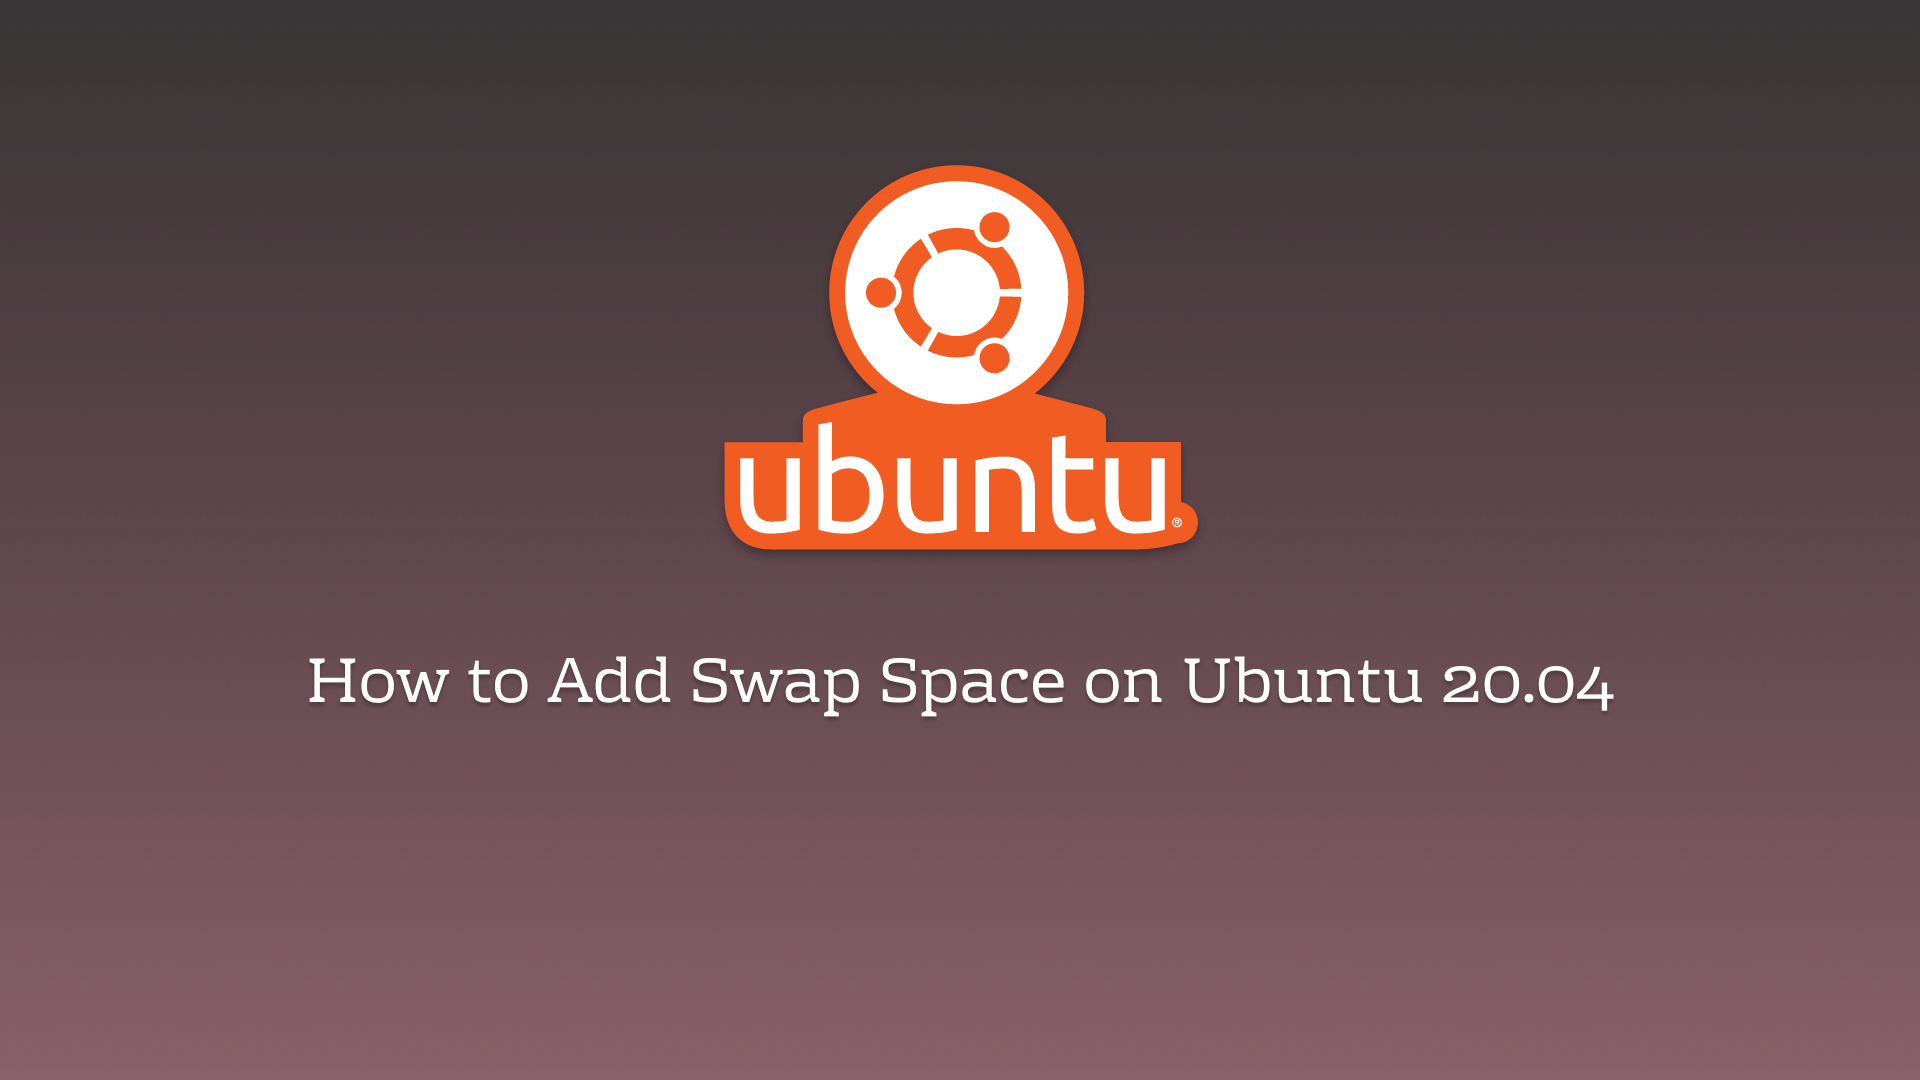 How to add swap space on Ubuntu